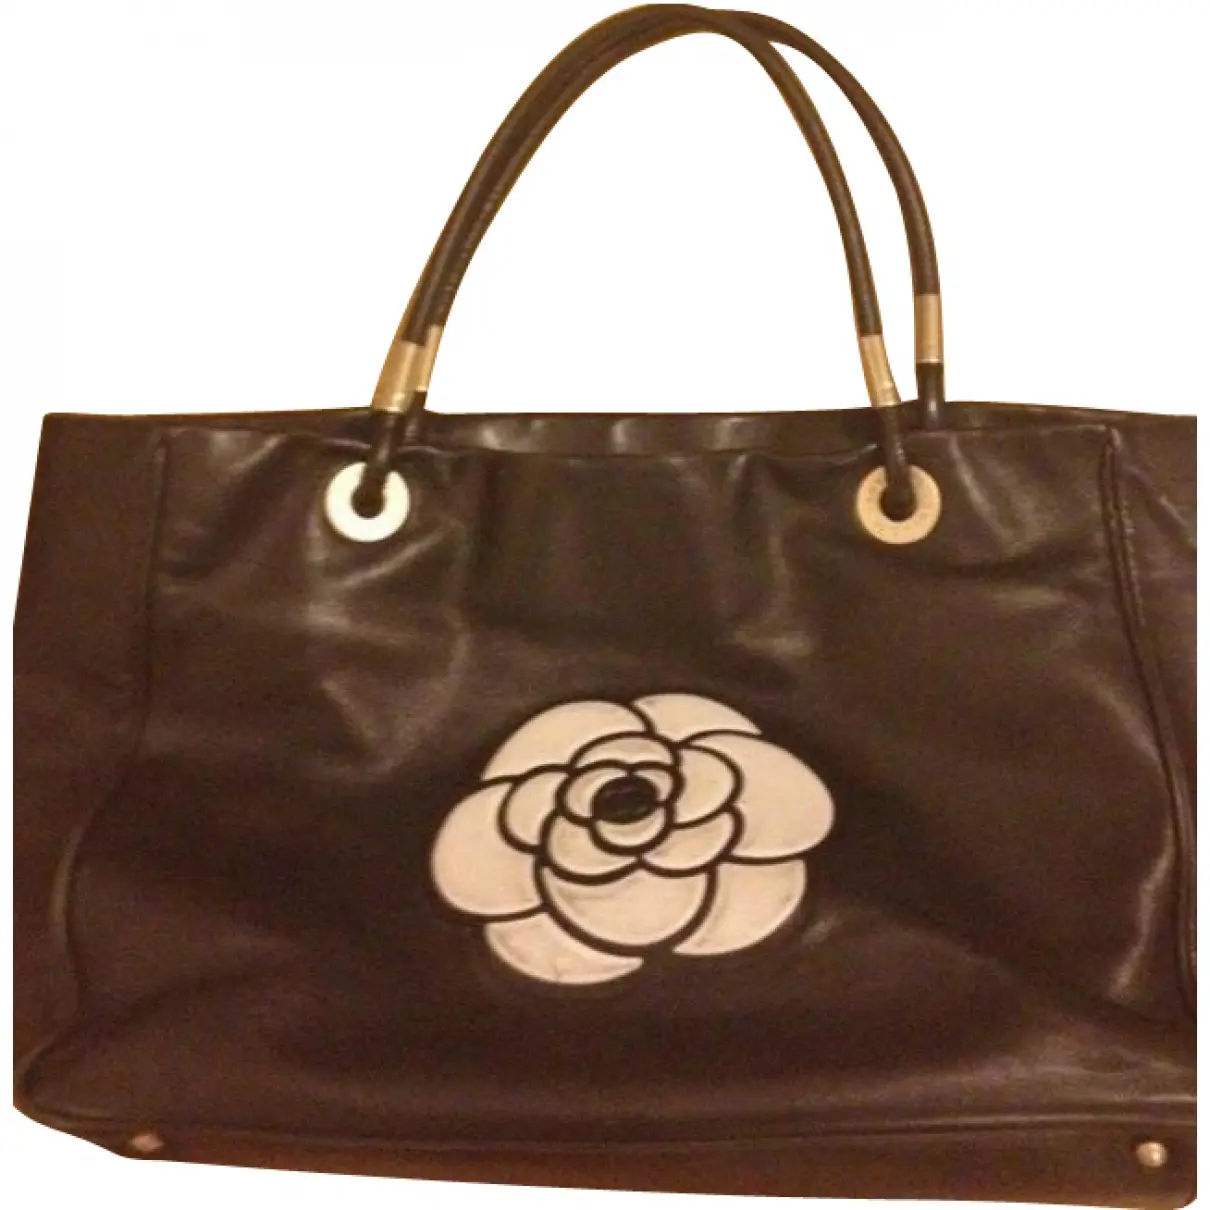 Black Leather Handbag Chanel